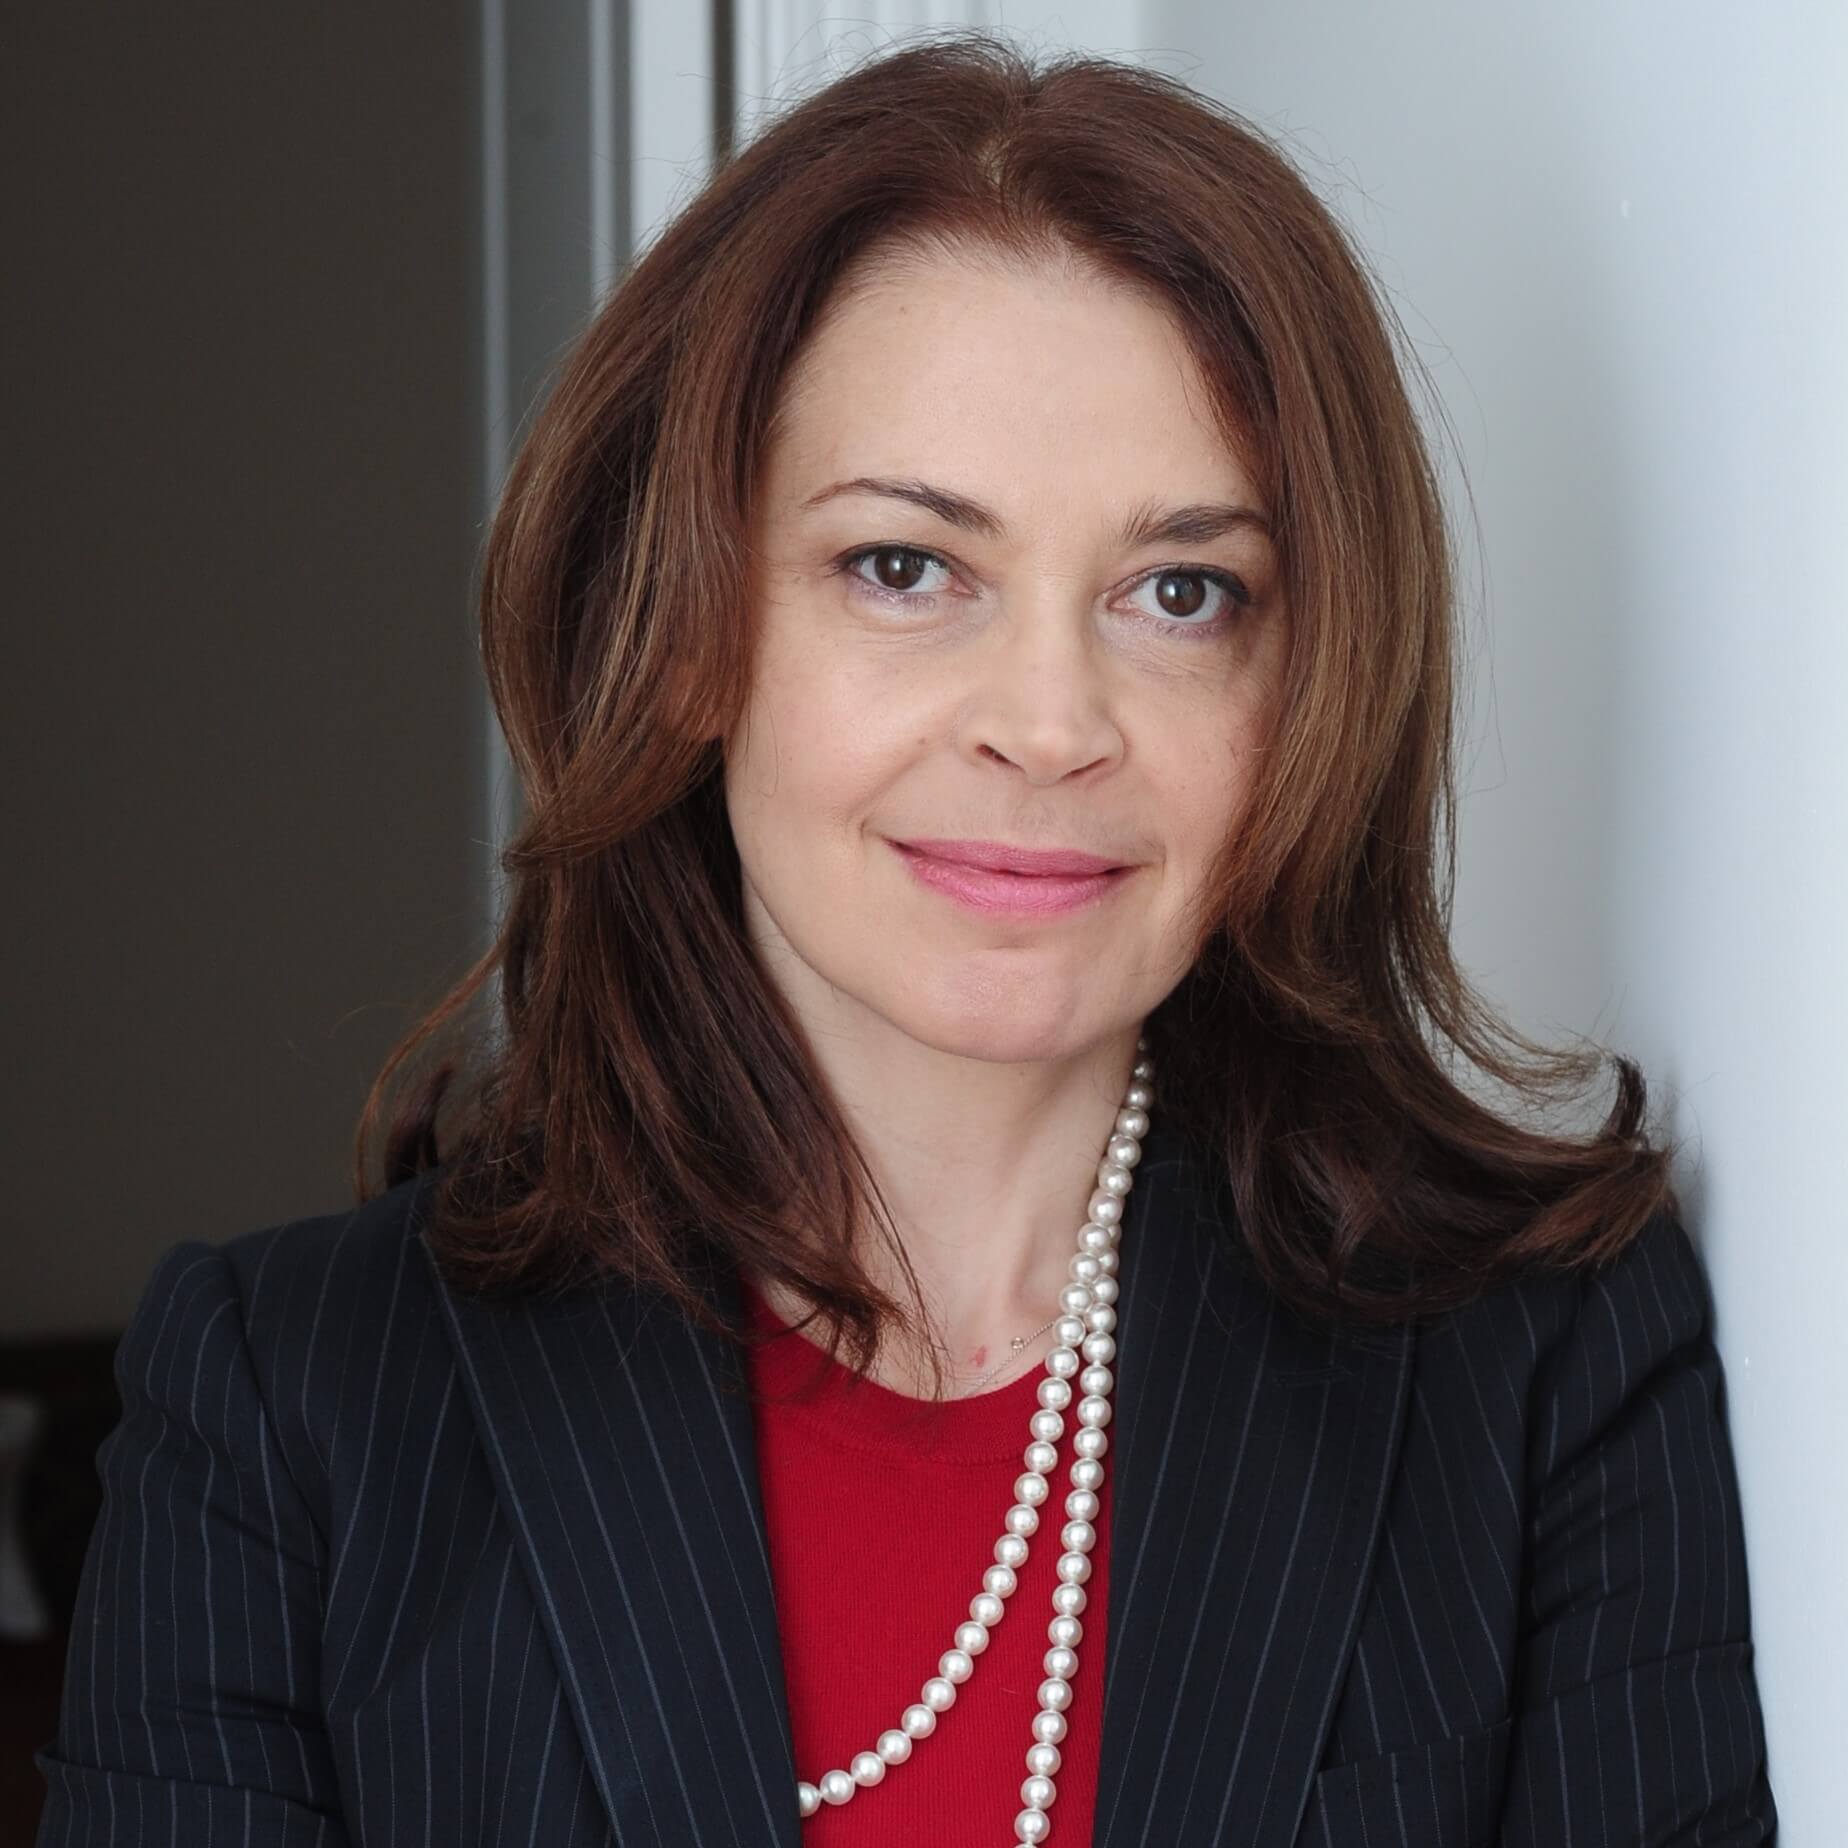 Female Personal Injury Attorney in Houston Texas - Nejd Jill Yaziji